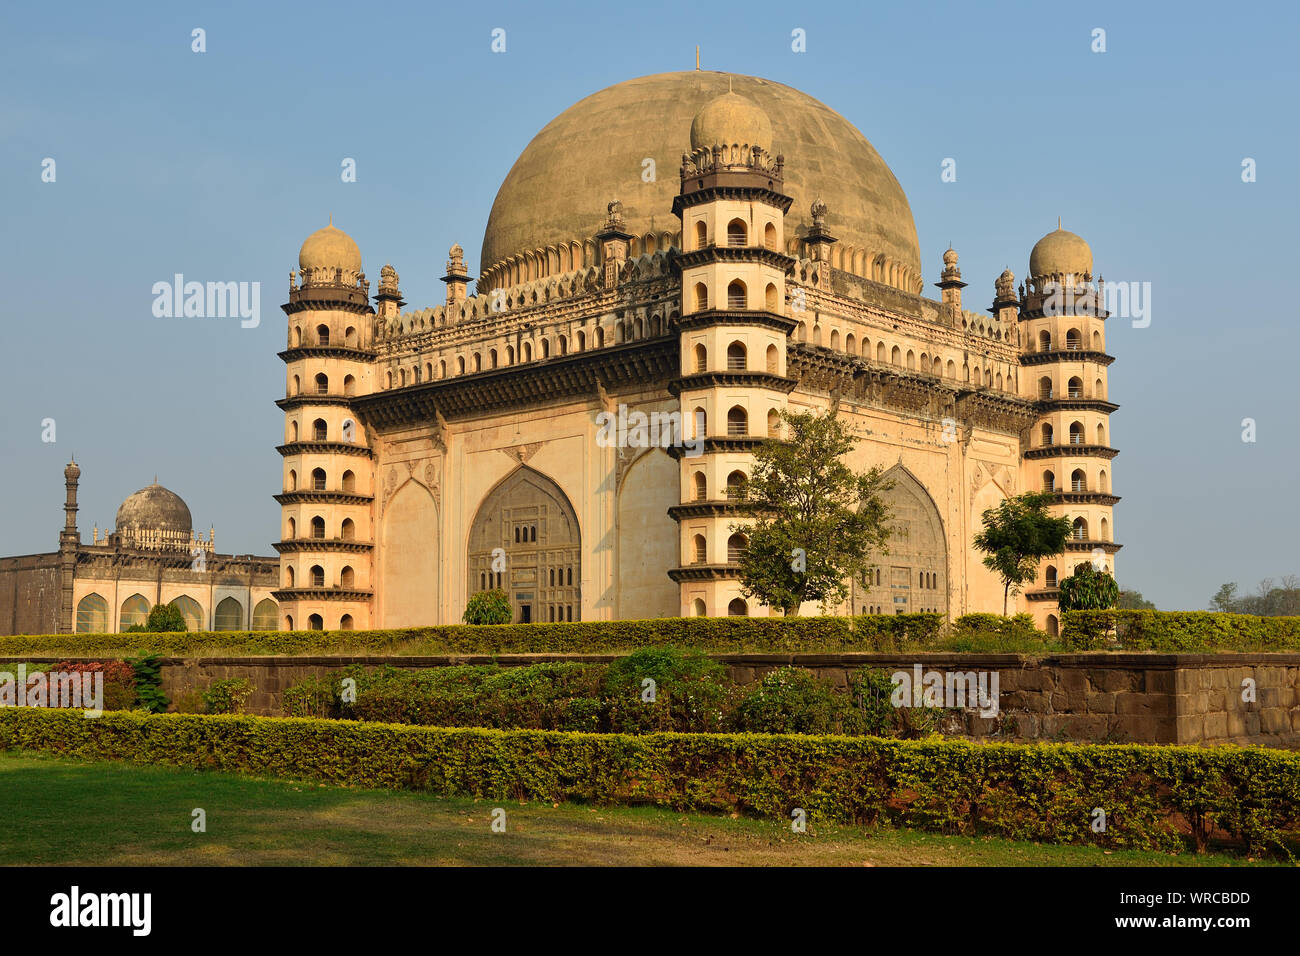 India, Karnataka state, Bijapur, Gol Gumbaz, the mausoleum of Sultan of Bijapur. Stock Photo